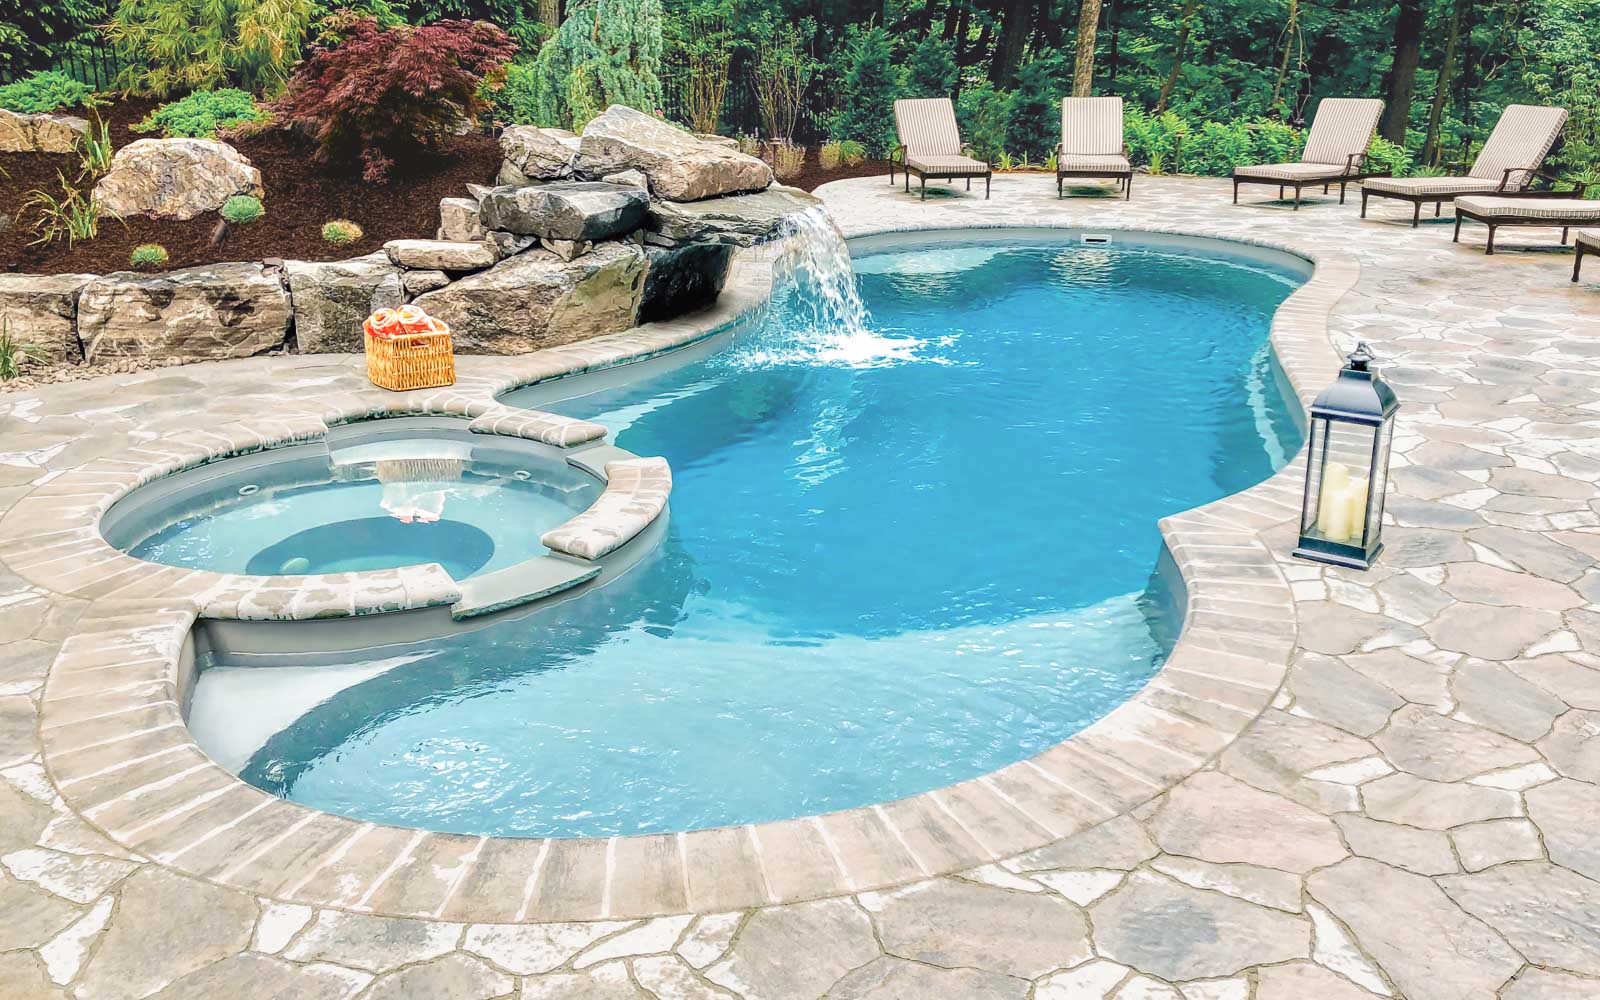 Leisure Pools Allure freeform fiberglass swimming pool with built-in spa and splash deck